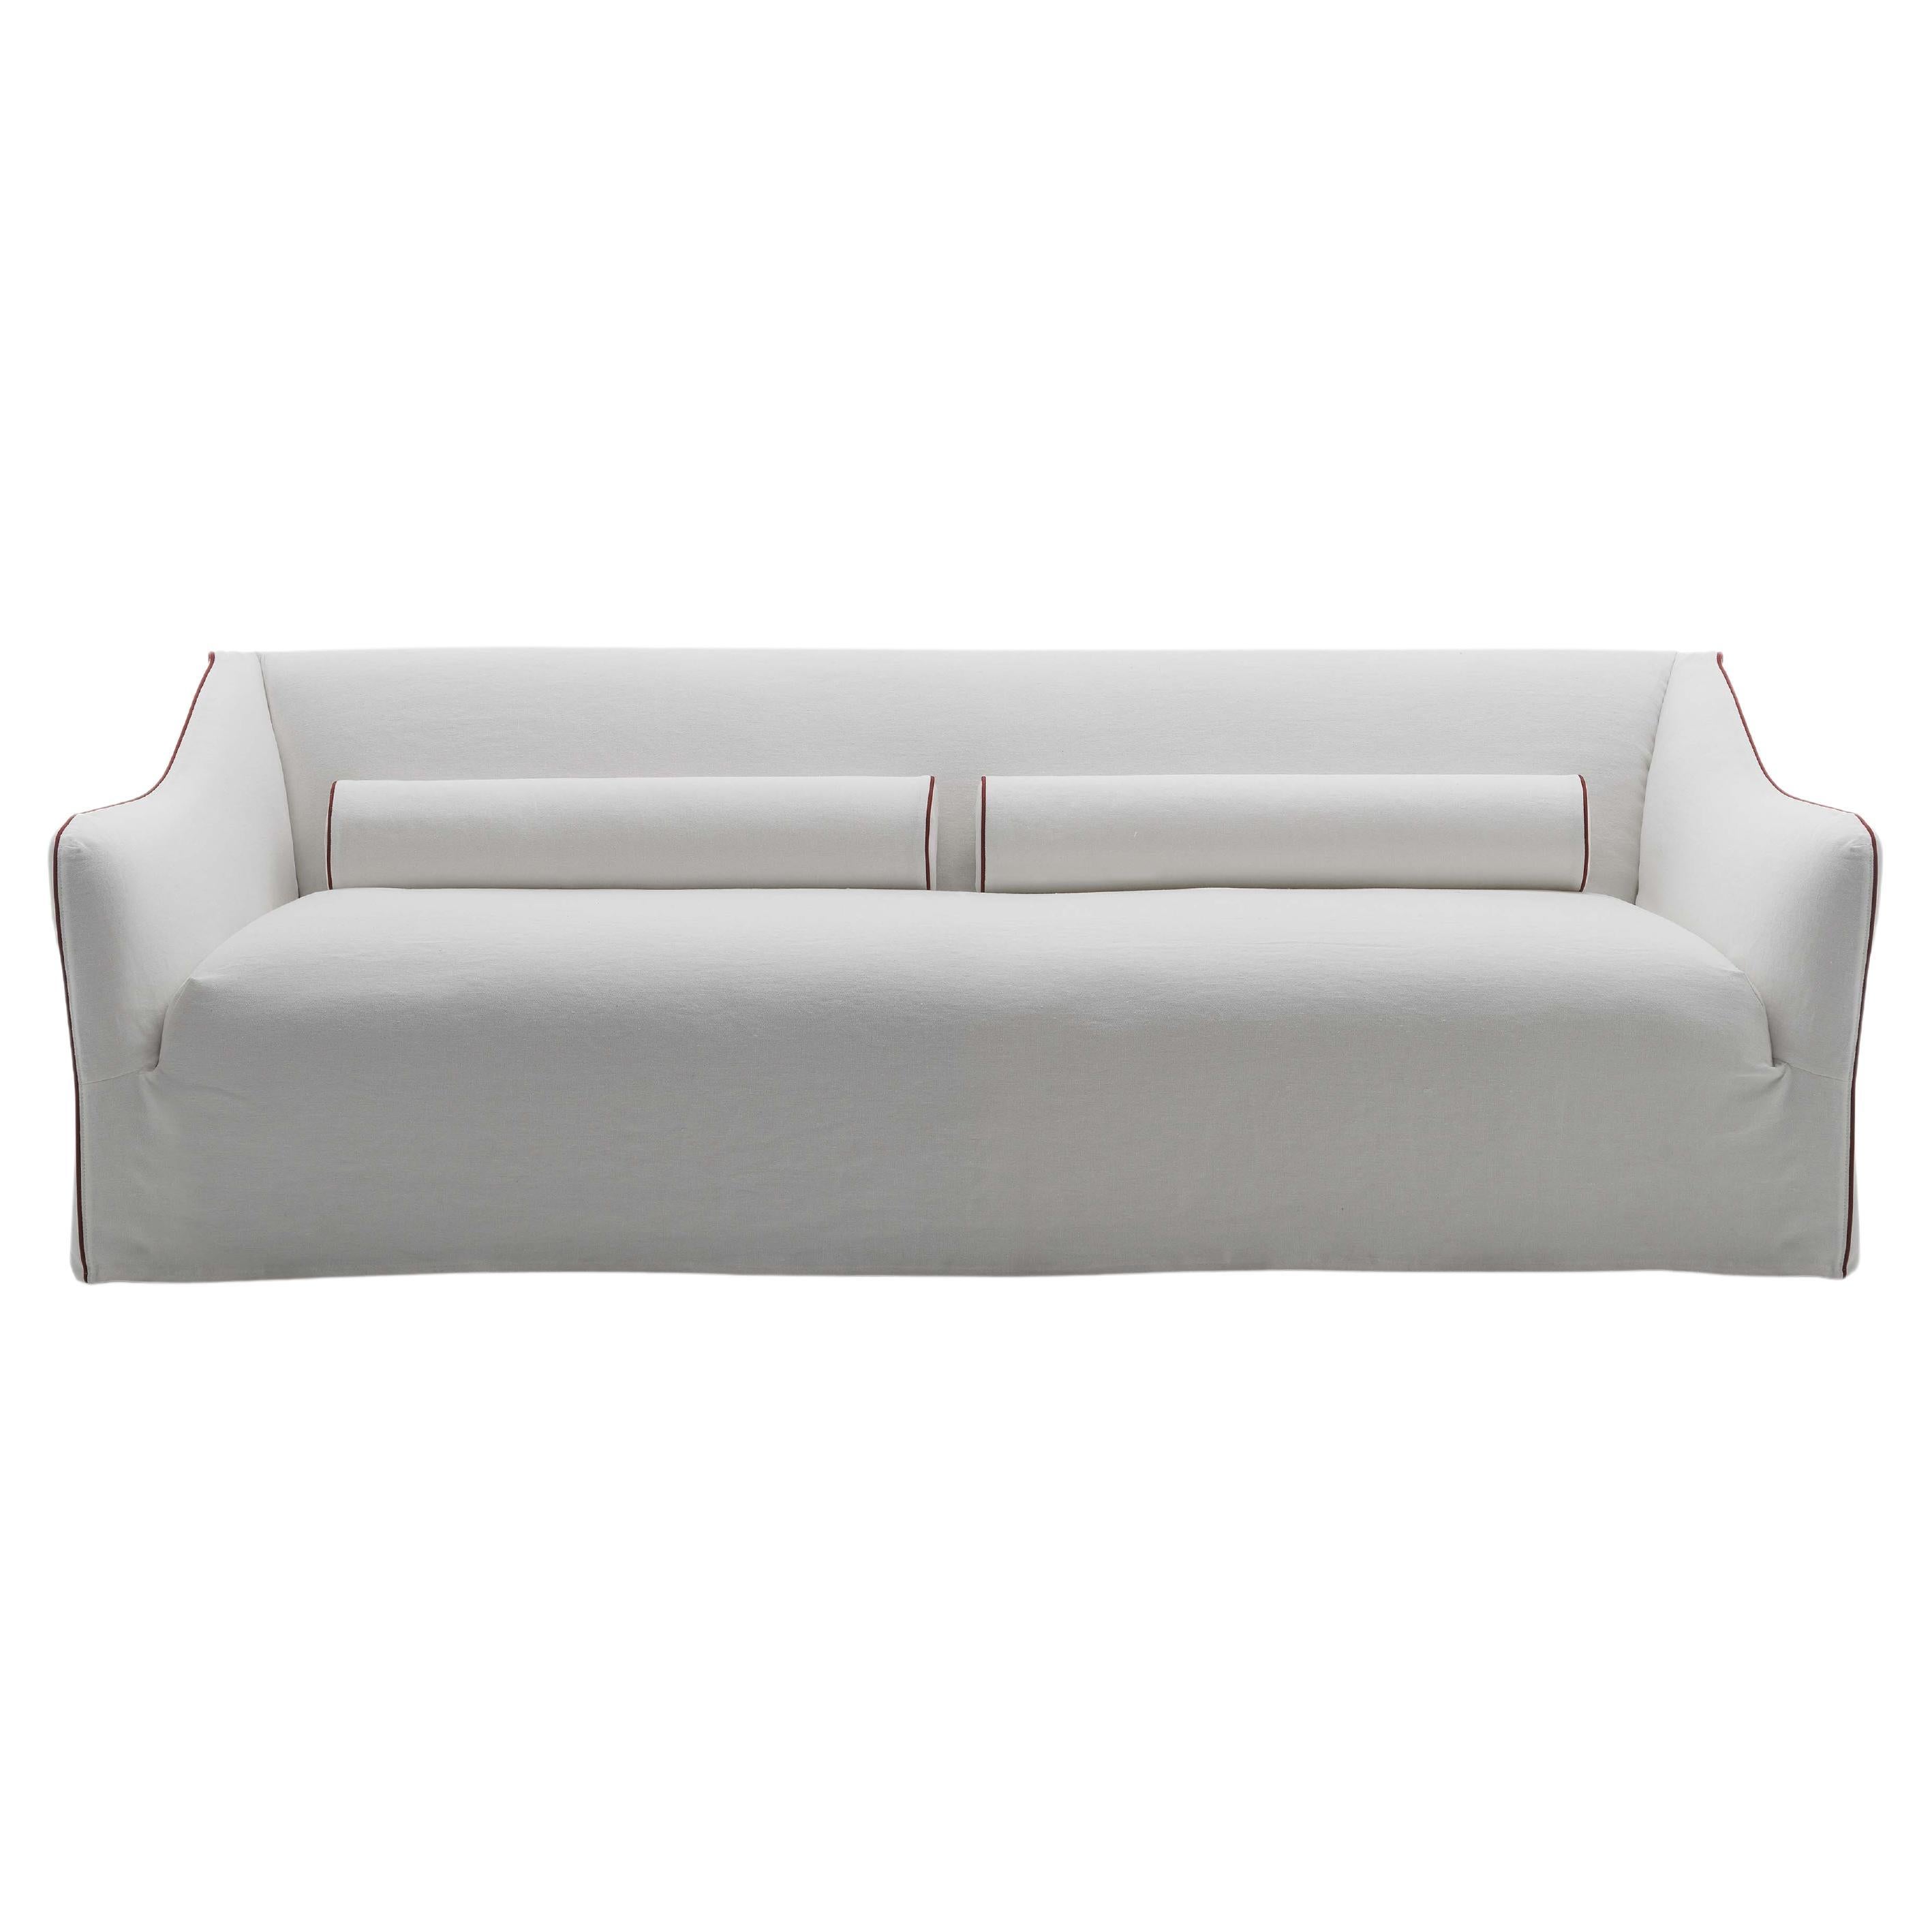 Gervasoni Sofa Upholstered Saia 12 by David Lopez Quincoces For Sale